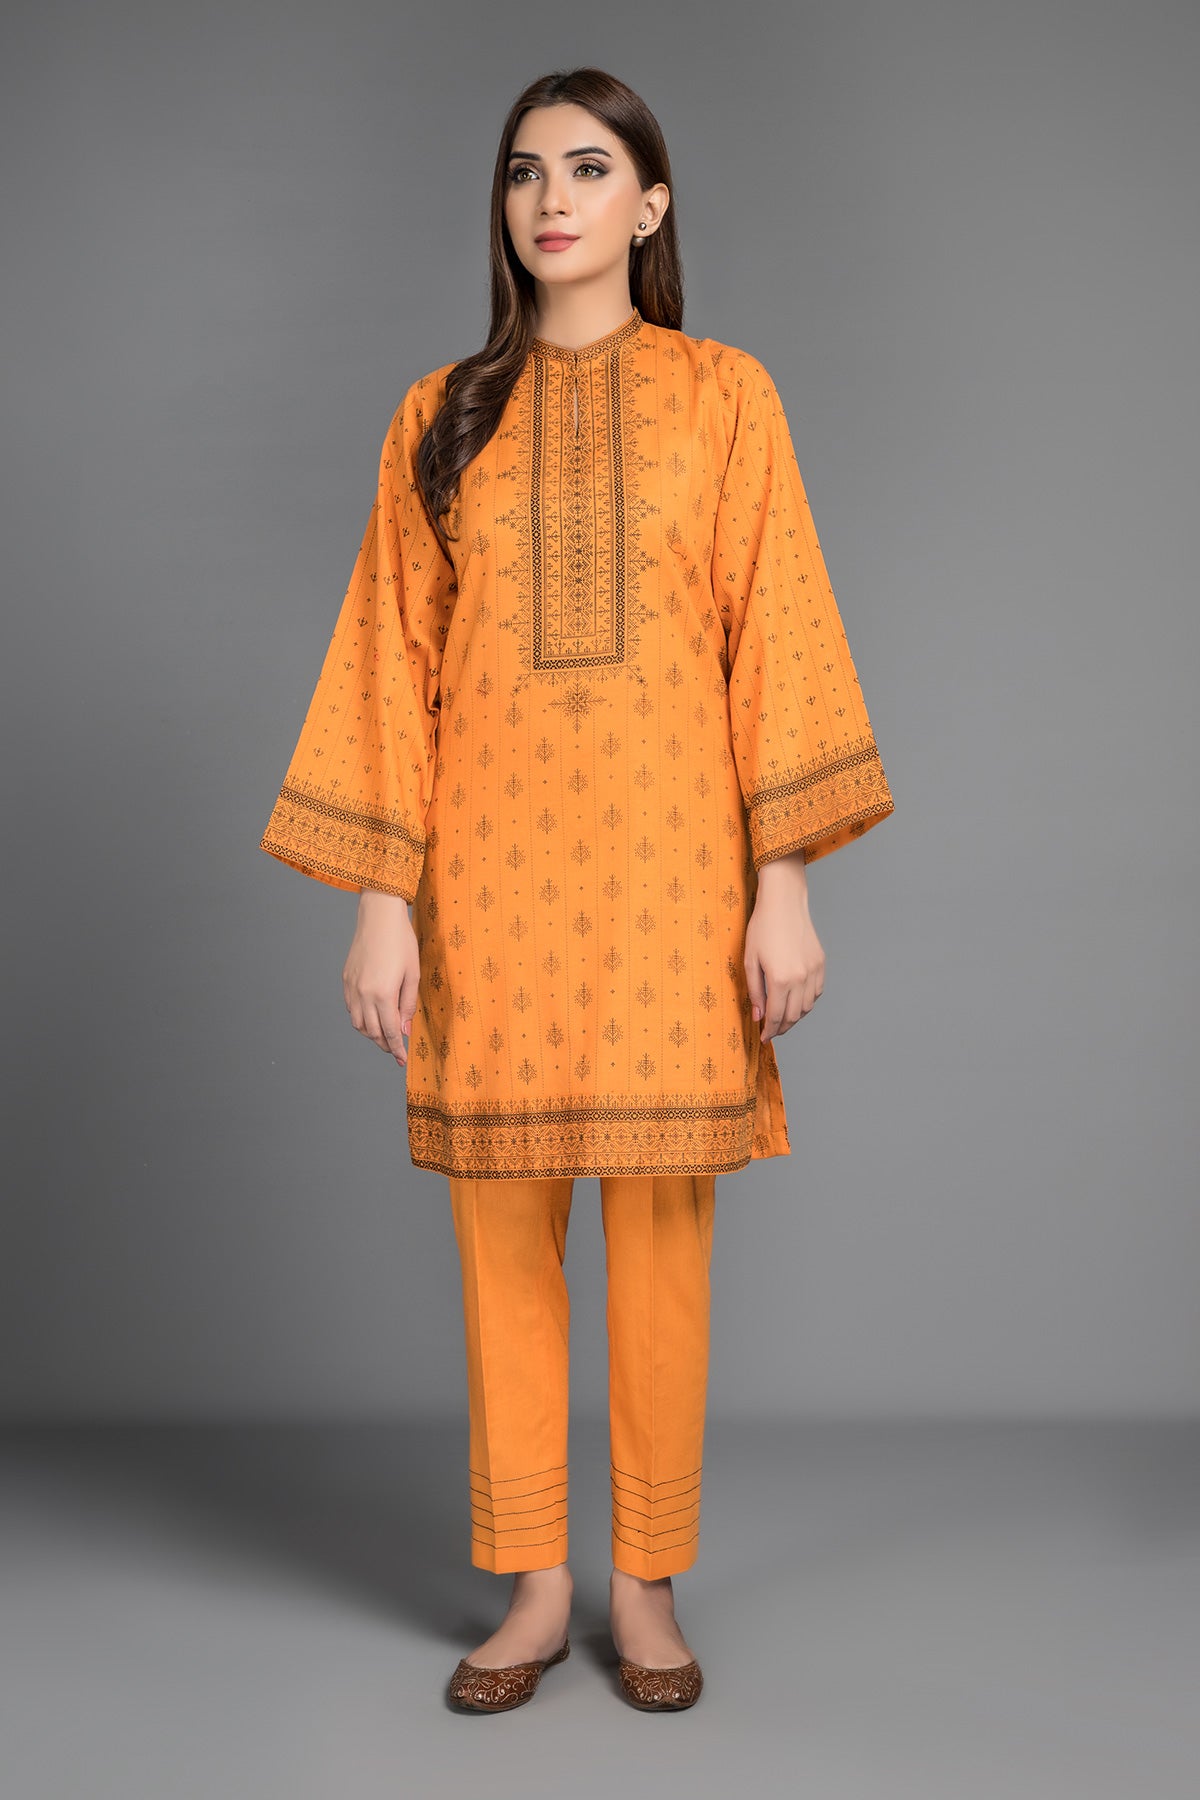 Printed Khaddar 2PC Dress